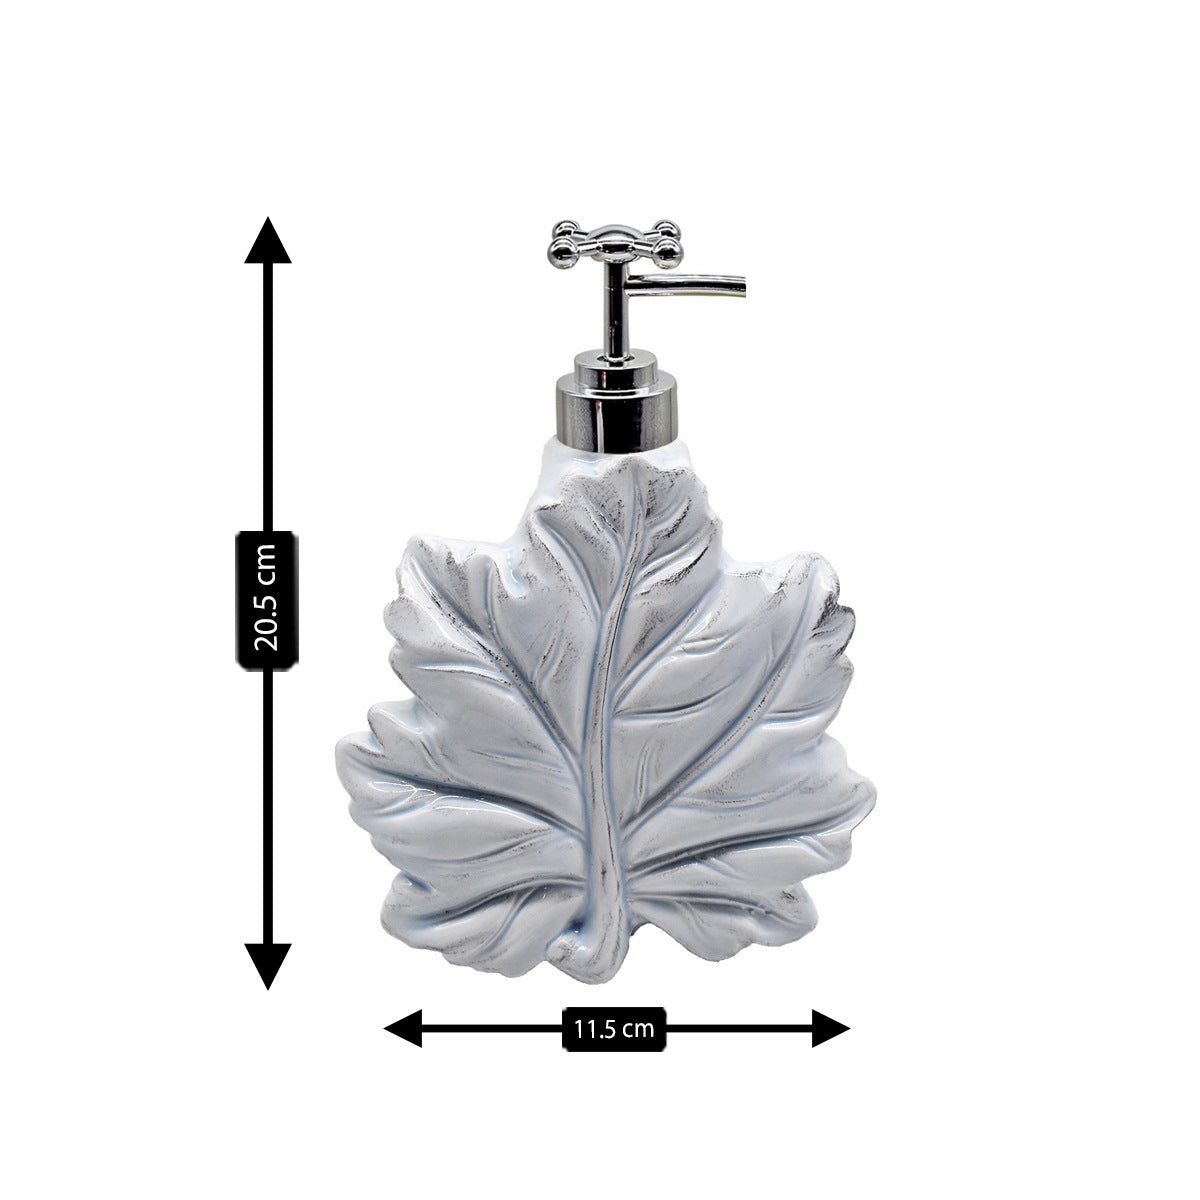 Ceramic Soap Dispenser handwash Pump for Bathroom, Set of 1, Blue (8635)